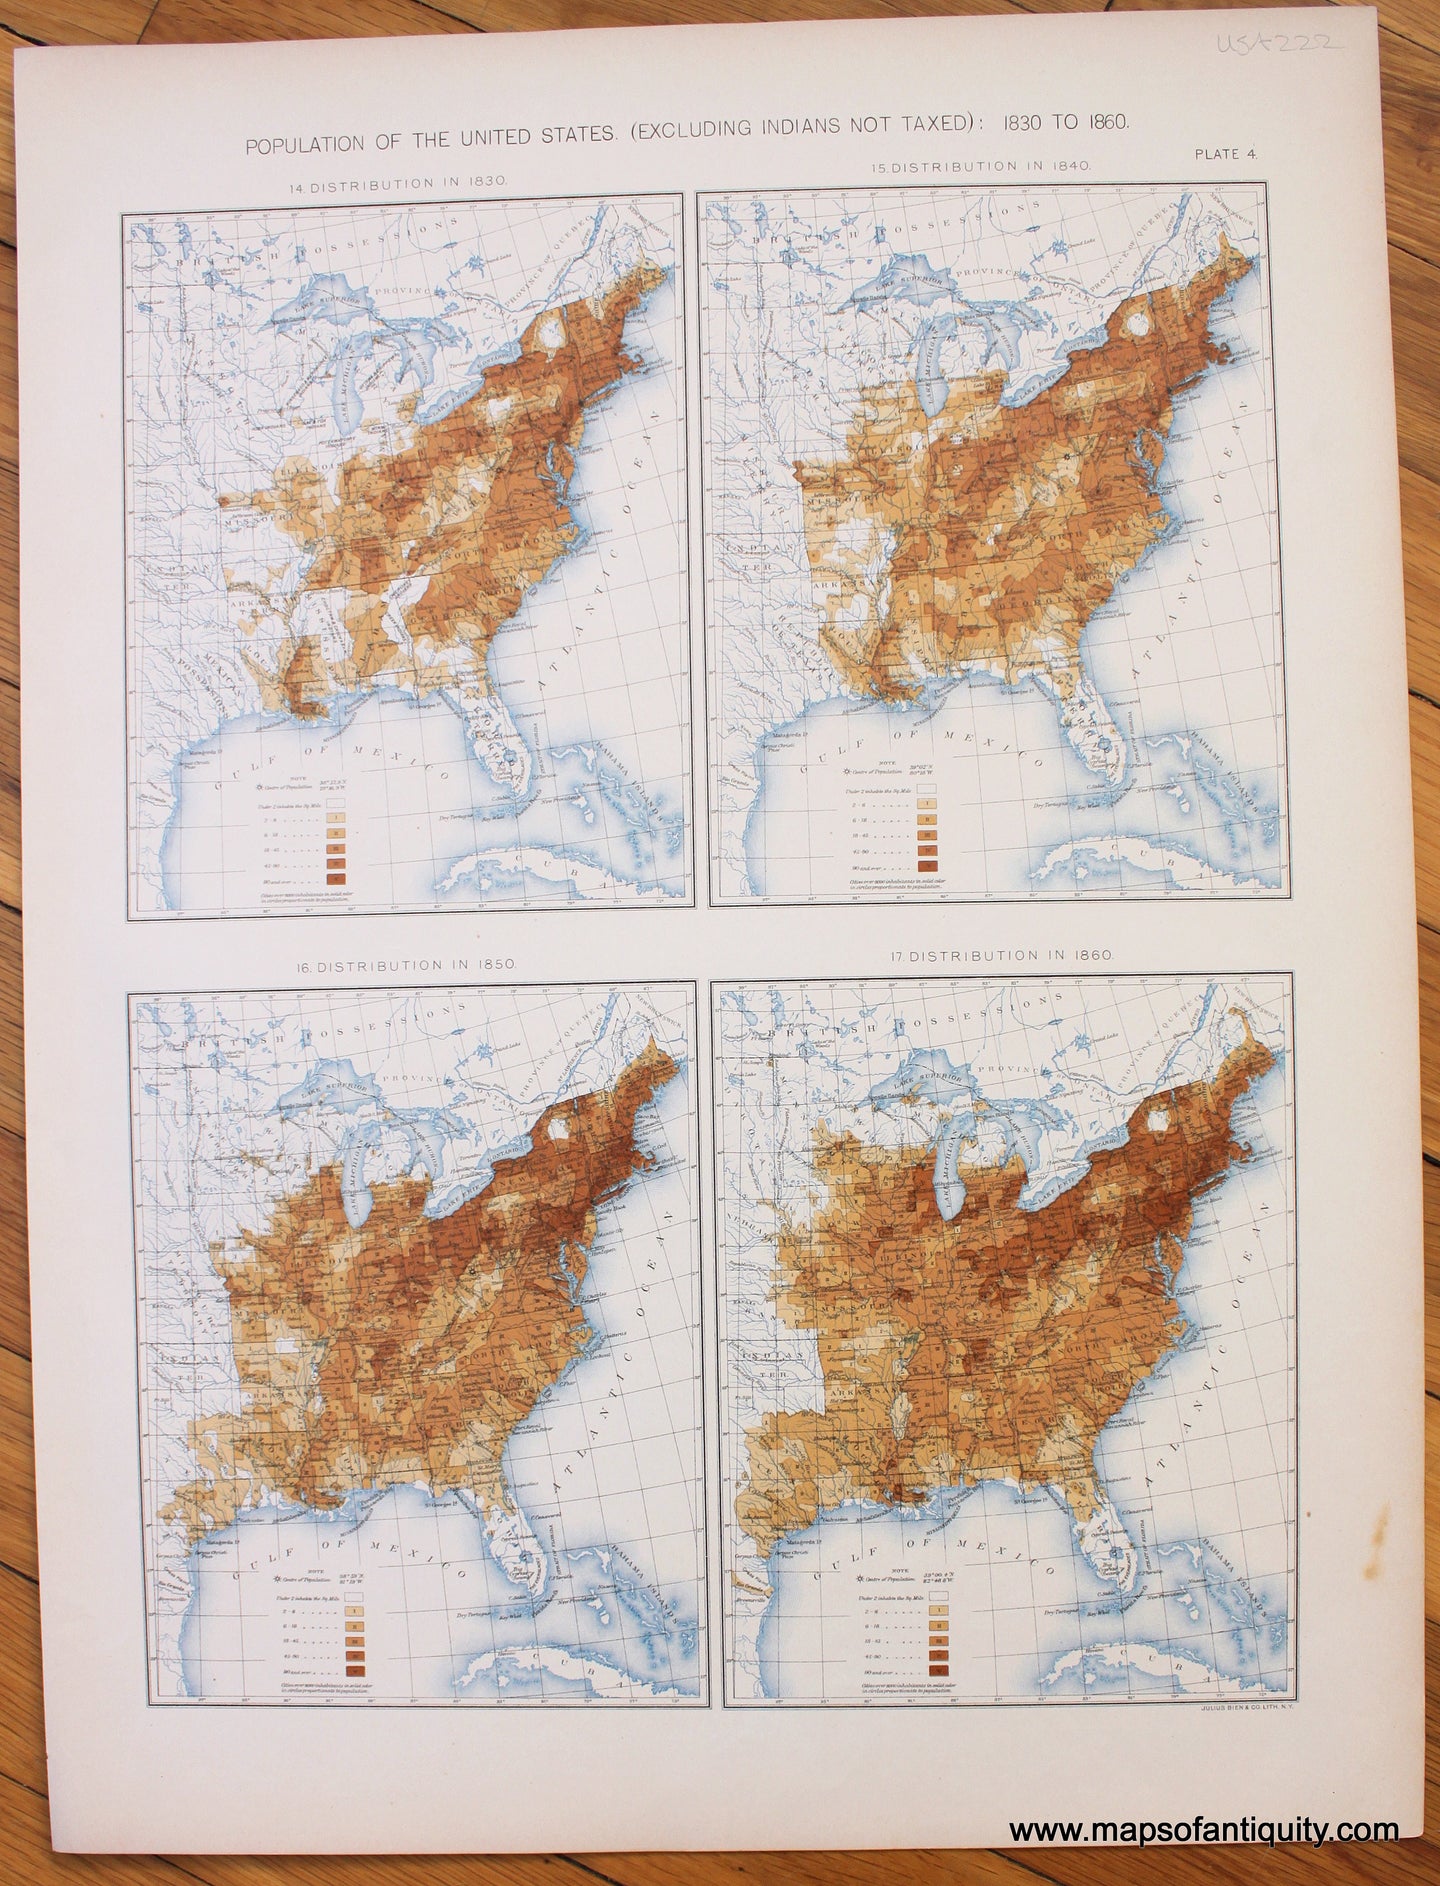 Maps-Antiquity-Anitque-Map-Statistical-Atlas-Population-United-States-America-USA-1898-1830-1860-Distribution-Eleventh-Census-Gannett